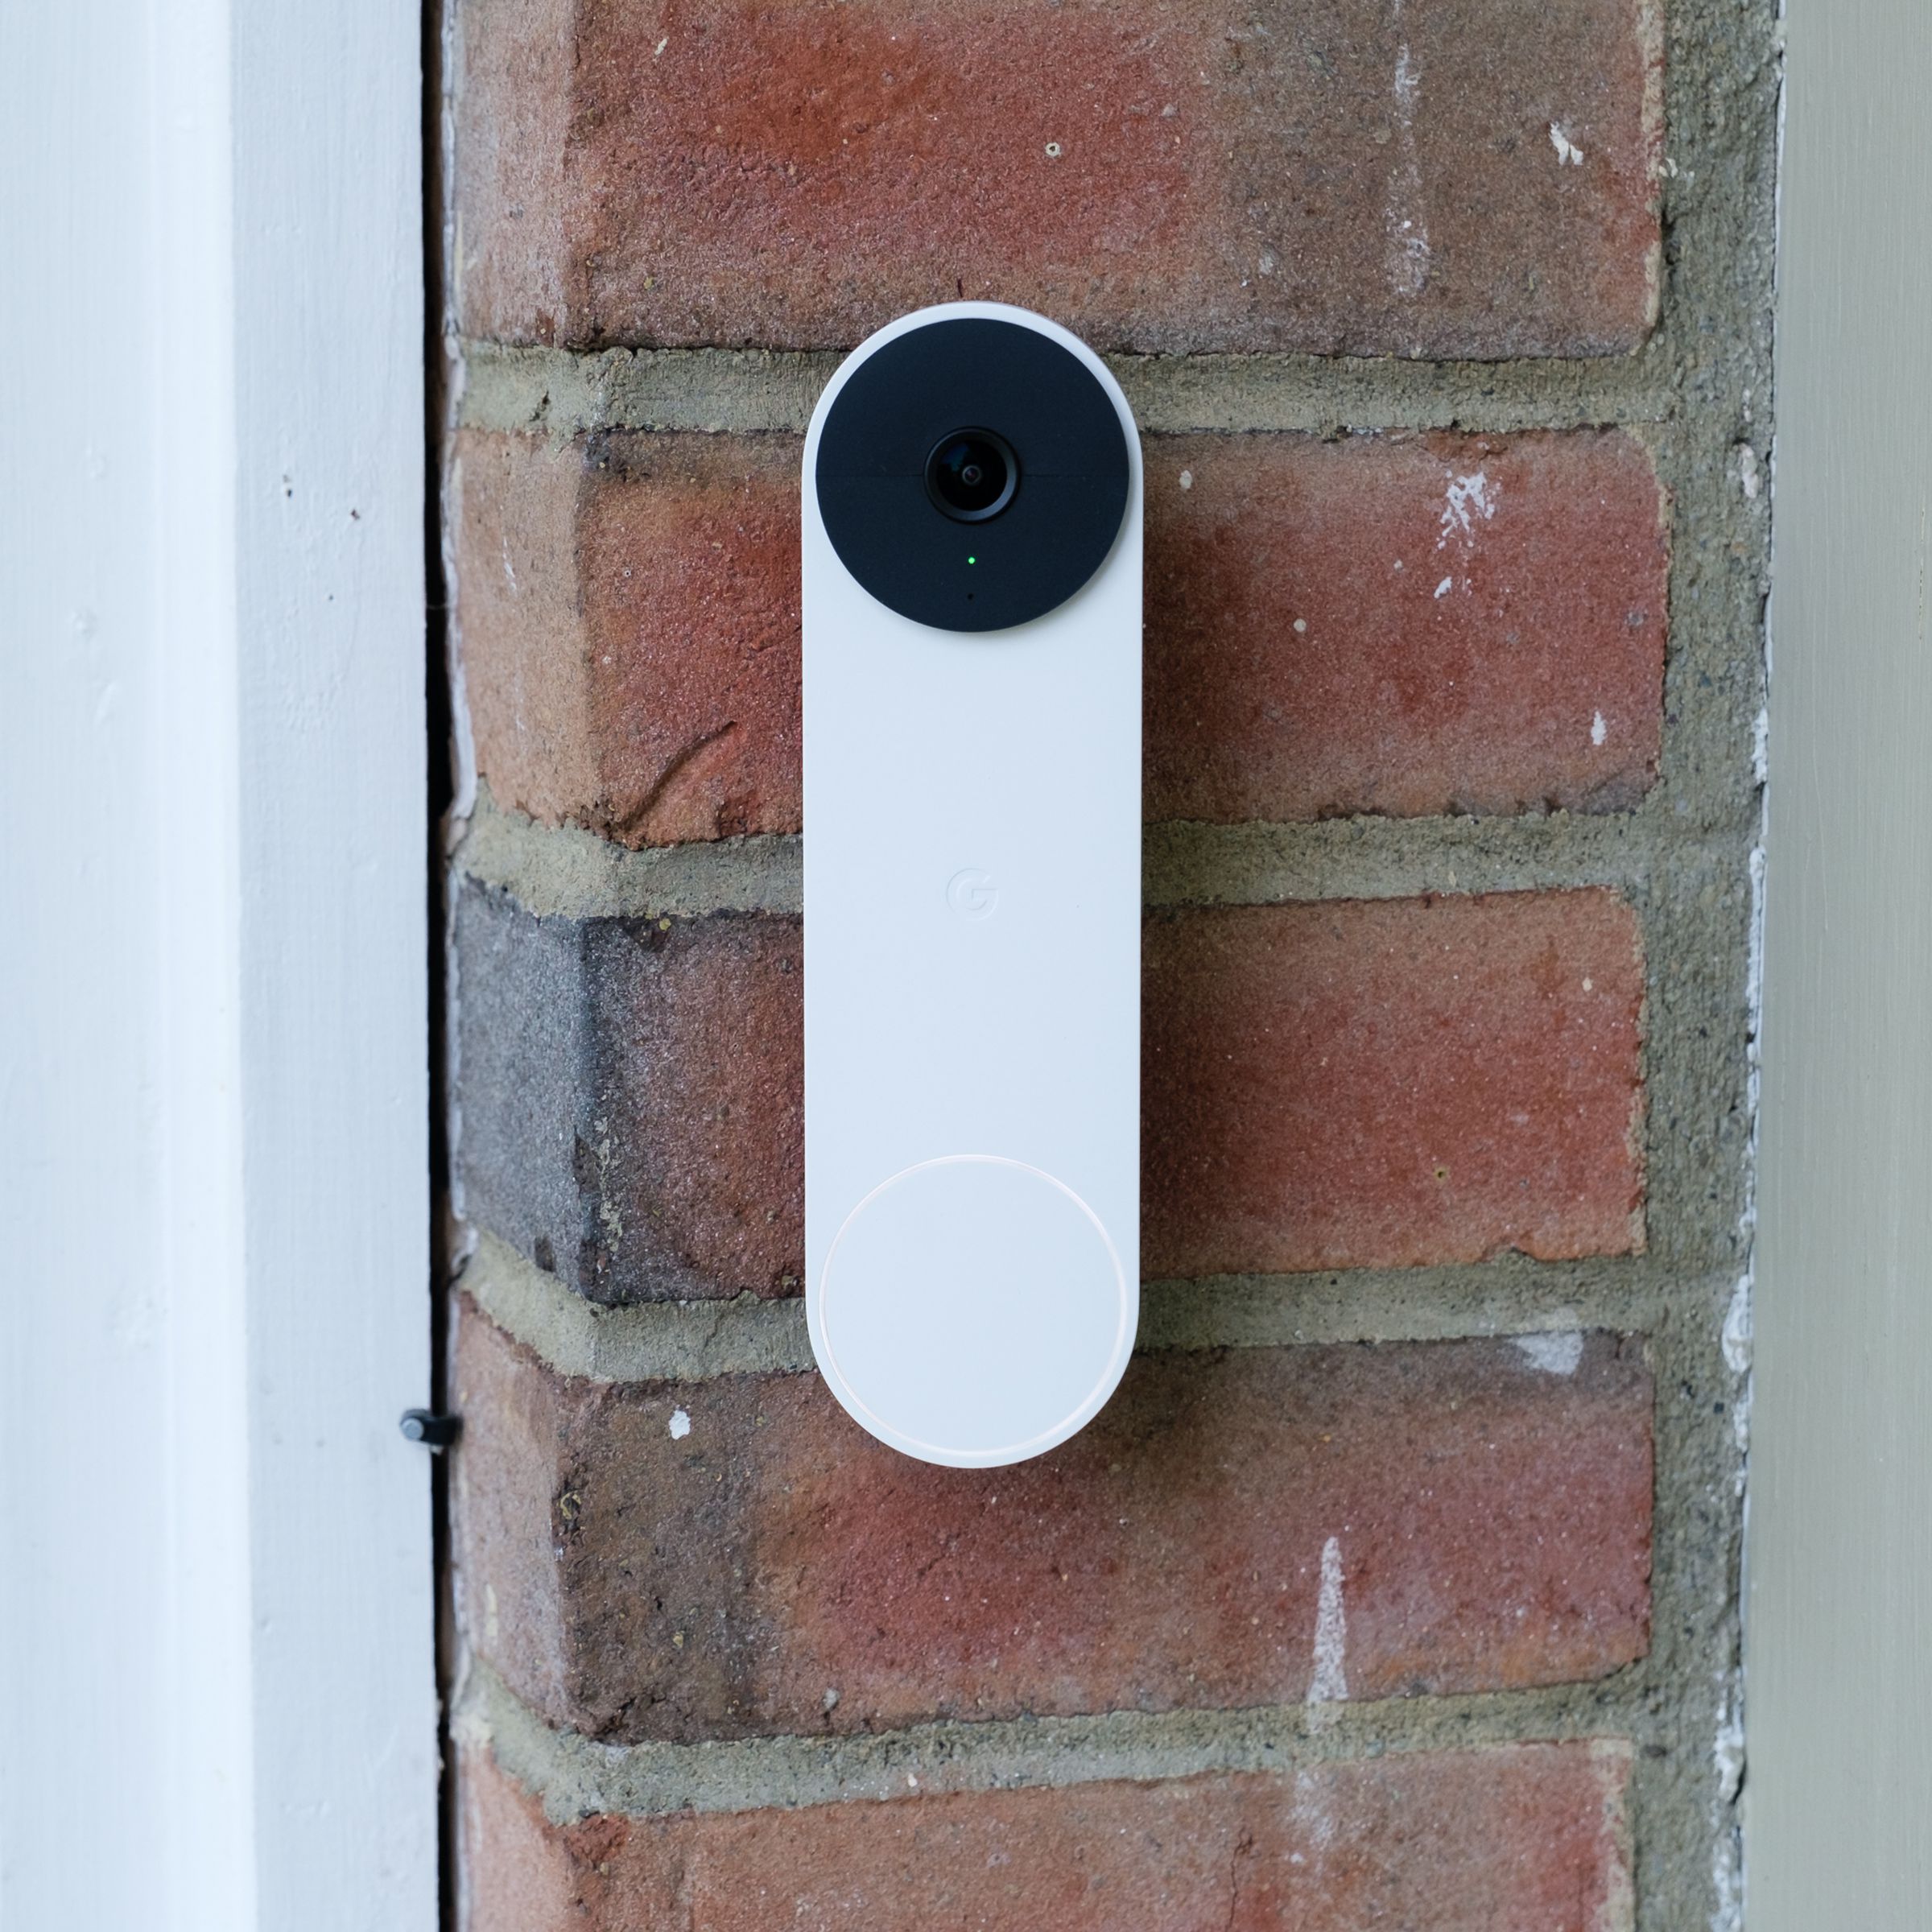 The new battery-powered Nest Doorbell